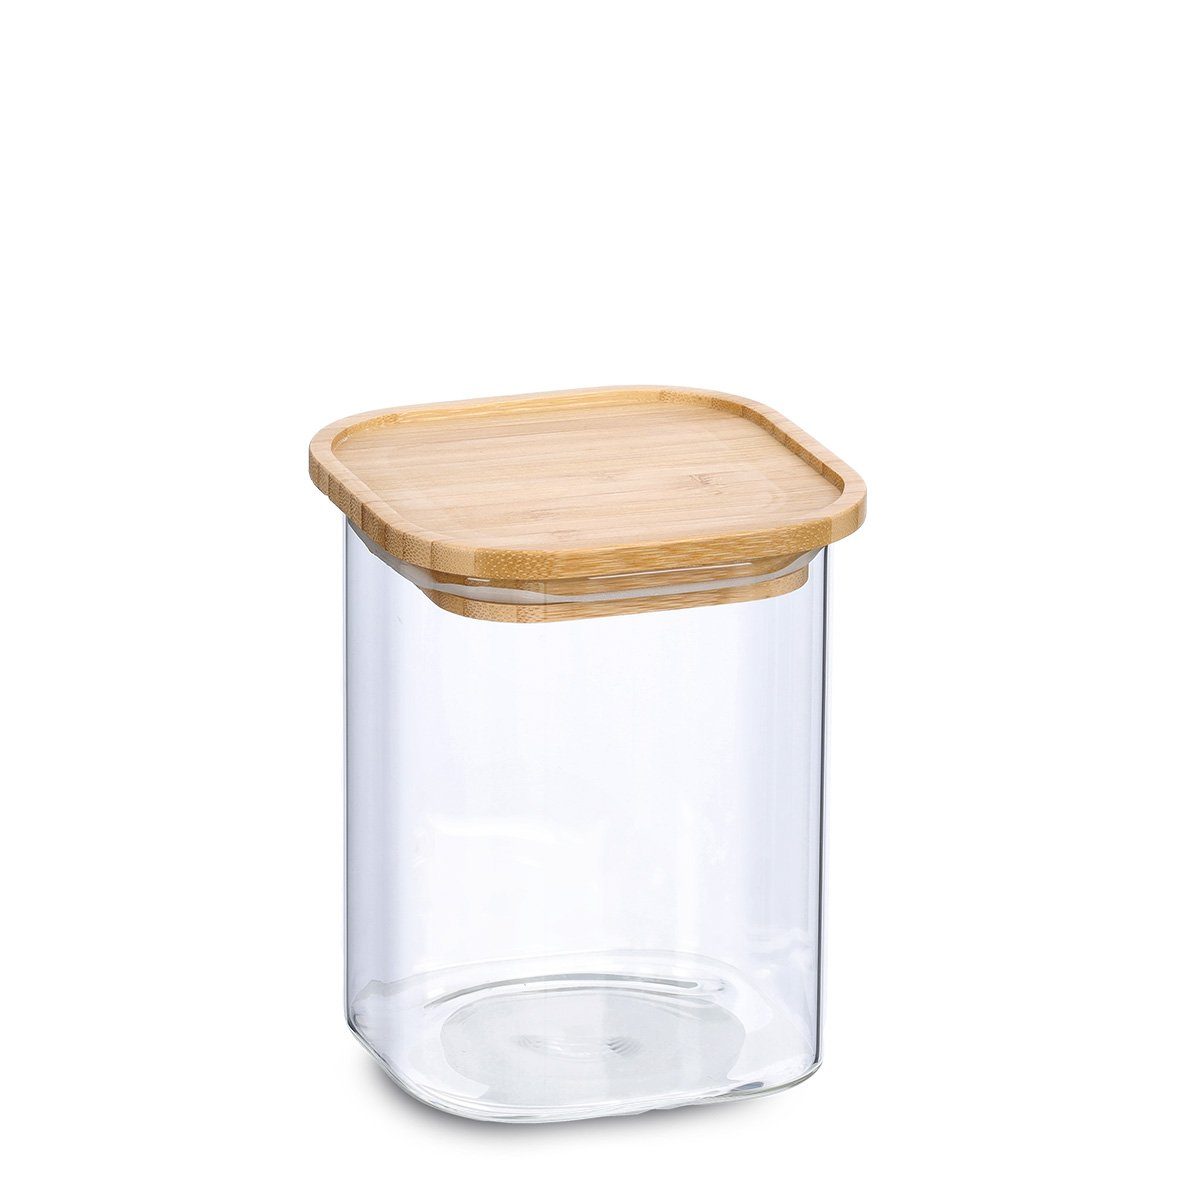 Zeller Present Badaccessoire-Set Vorratsglas m. Bambusdeckel, 900 ml,  Borosilikat Glas / Bambus / Silikon, transparent, ca. 10 x 10 x 13,6 cm,  geeignet zum Lagern von trockenen Lebensmitteln